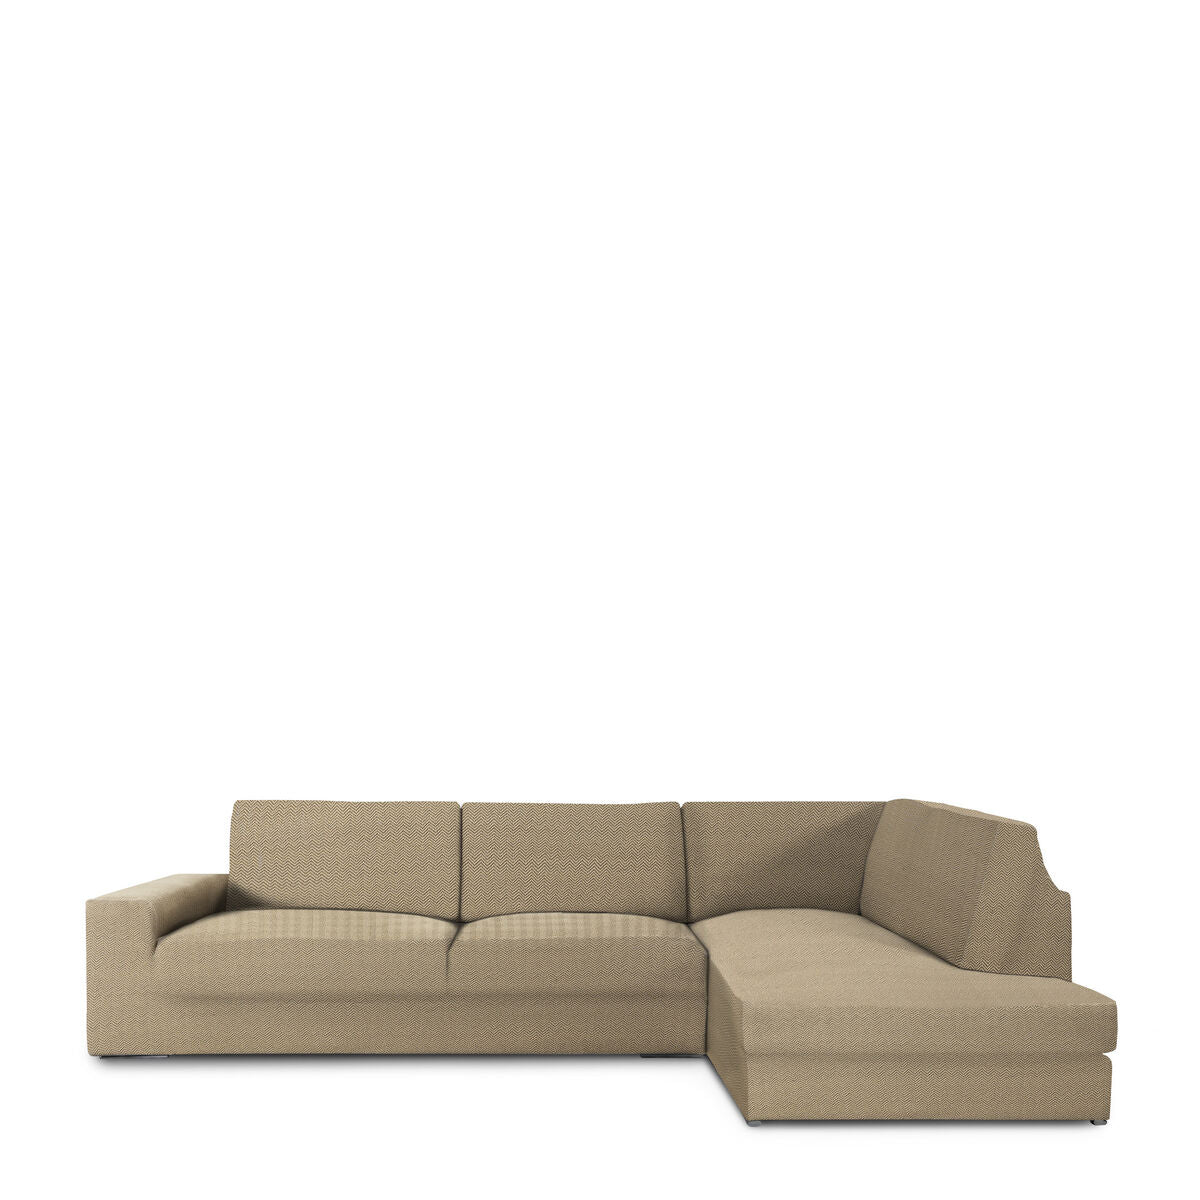 Copertina di divano Eysa Jaz beige 110 x 120 x 500 cm